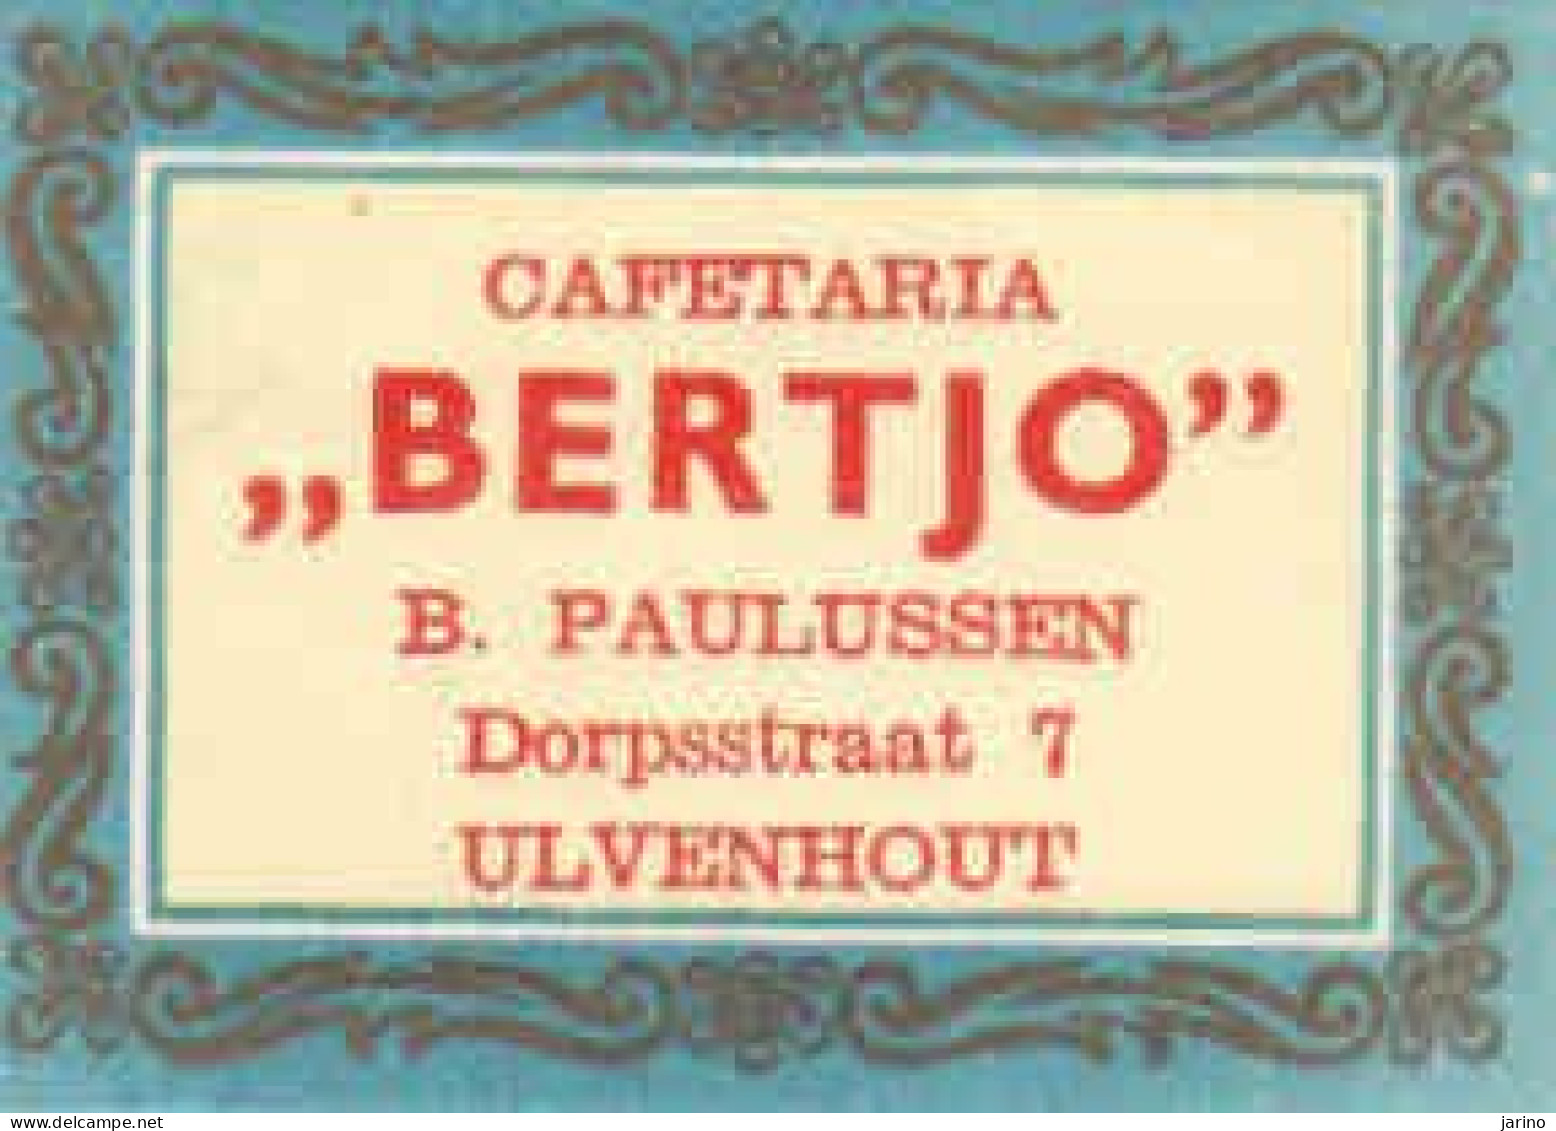 Dutch Matchbox Label, ULVENHOUT - North Brabant, Cafetaria BERTJO, B. Paulussen, Holland, Netherland - Boites D'allumettes - Etiquettes